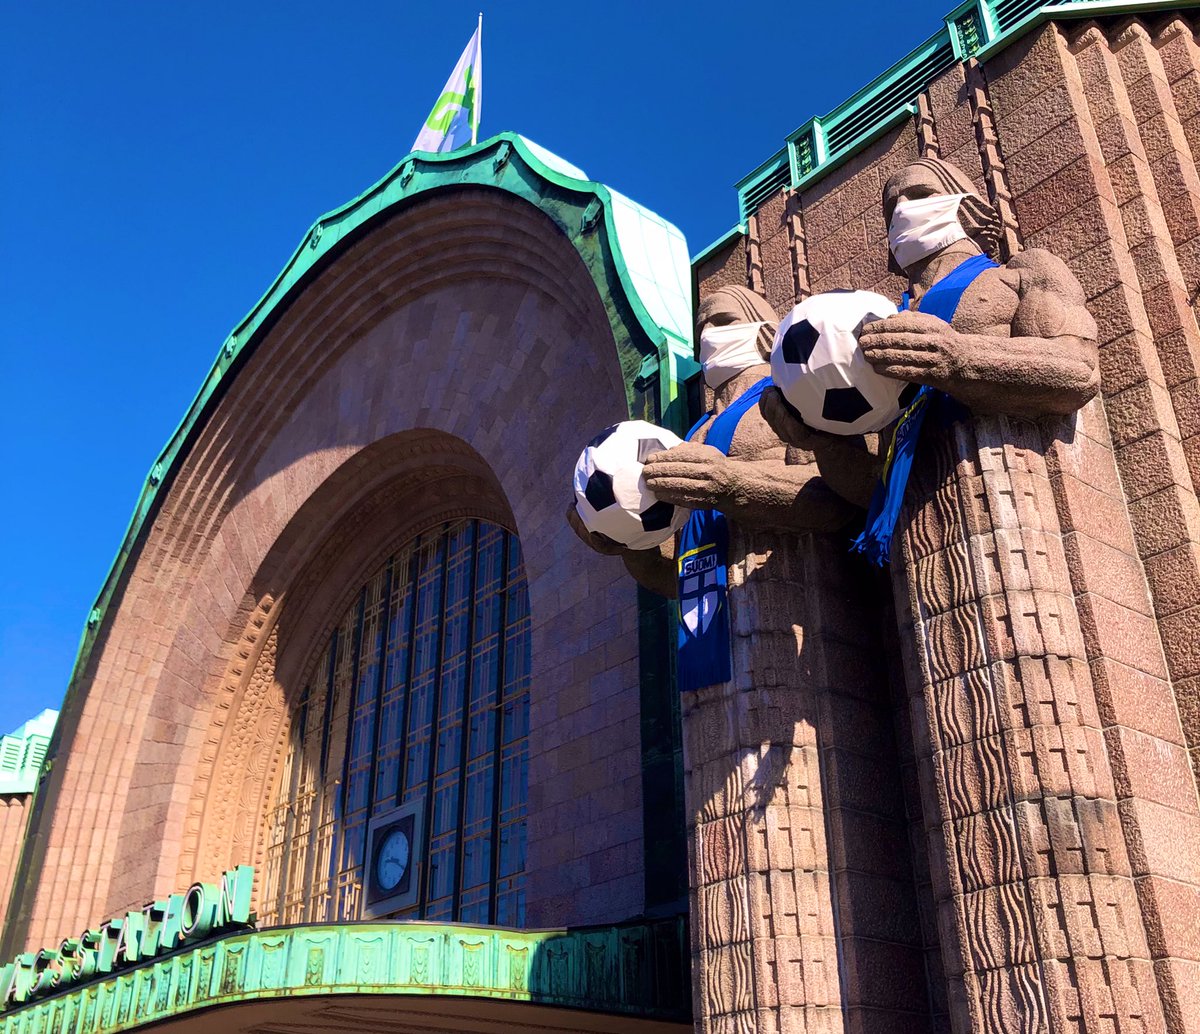 RT @SydesJokes: Just went past #Helsinki railway station #Finland #Suomi #EURO2020 https://t.co/t3ohihYjcW